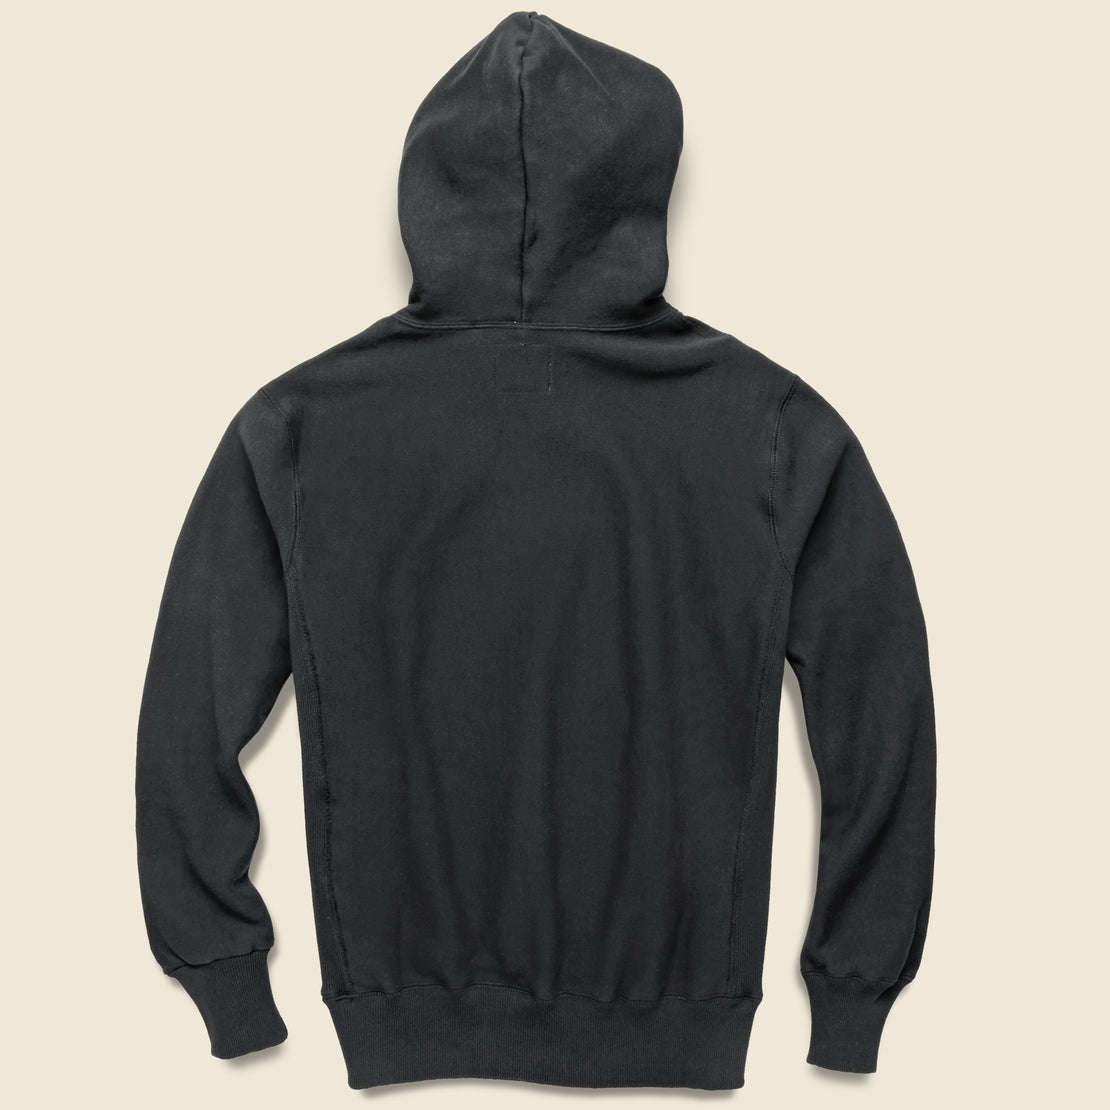 Todd Snyder + Champion - Popover Hoodie Sweatshirt - Black - Todd Snyder - STAG Provisions - Tops - Fleece / Sweatshirt